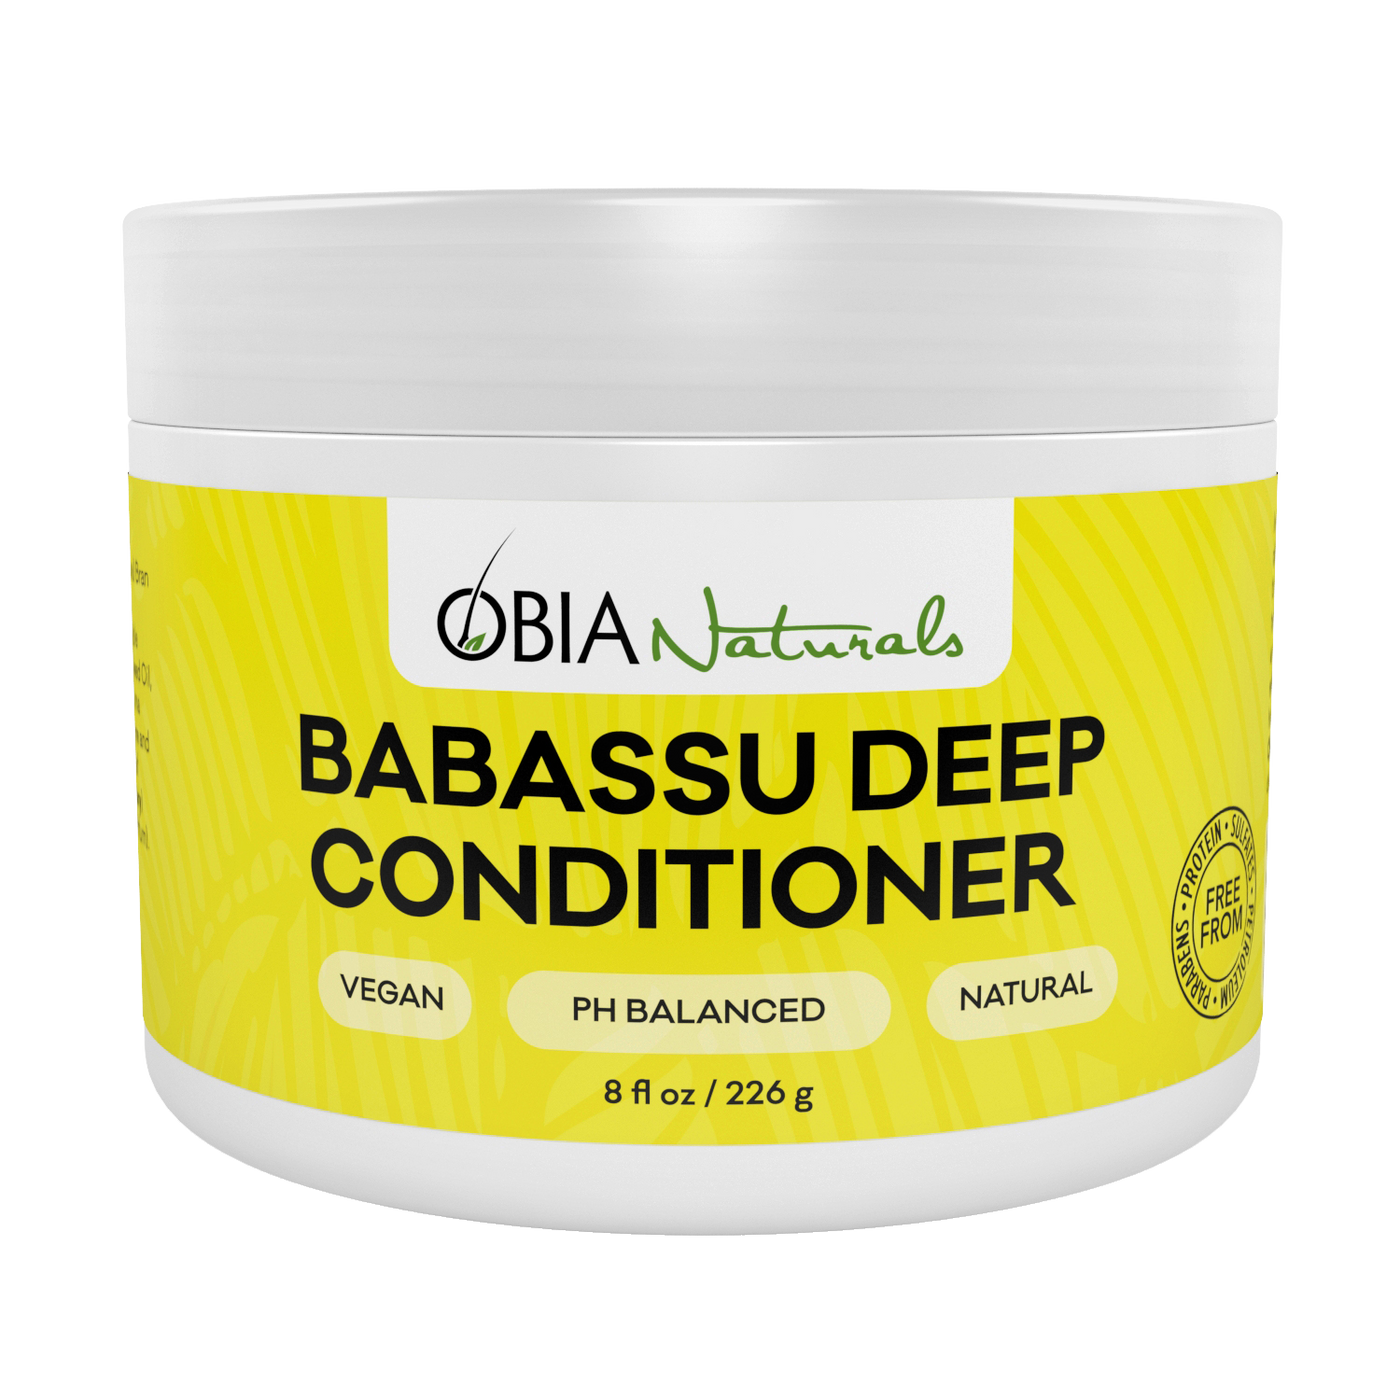 Babassu Deep Conditioner - OBIA Naturals - 1